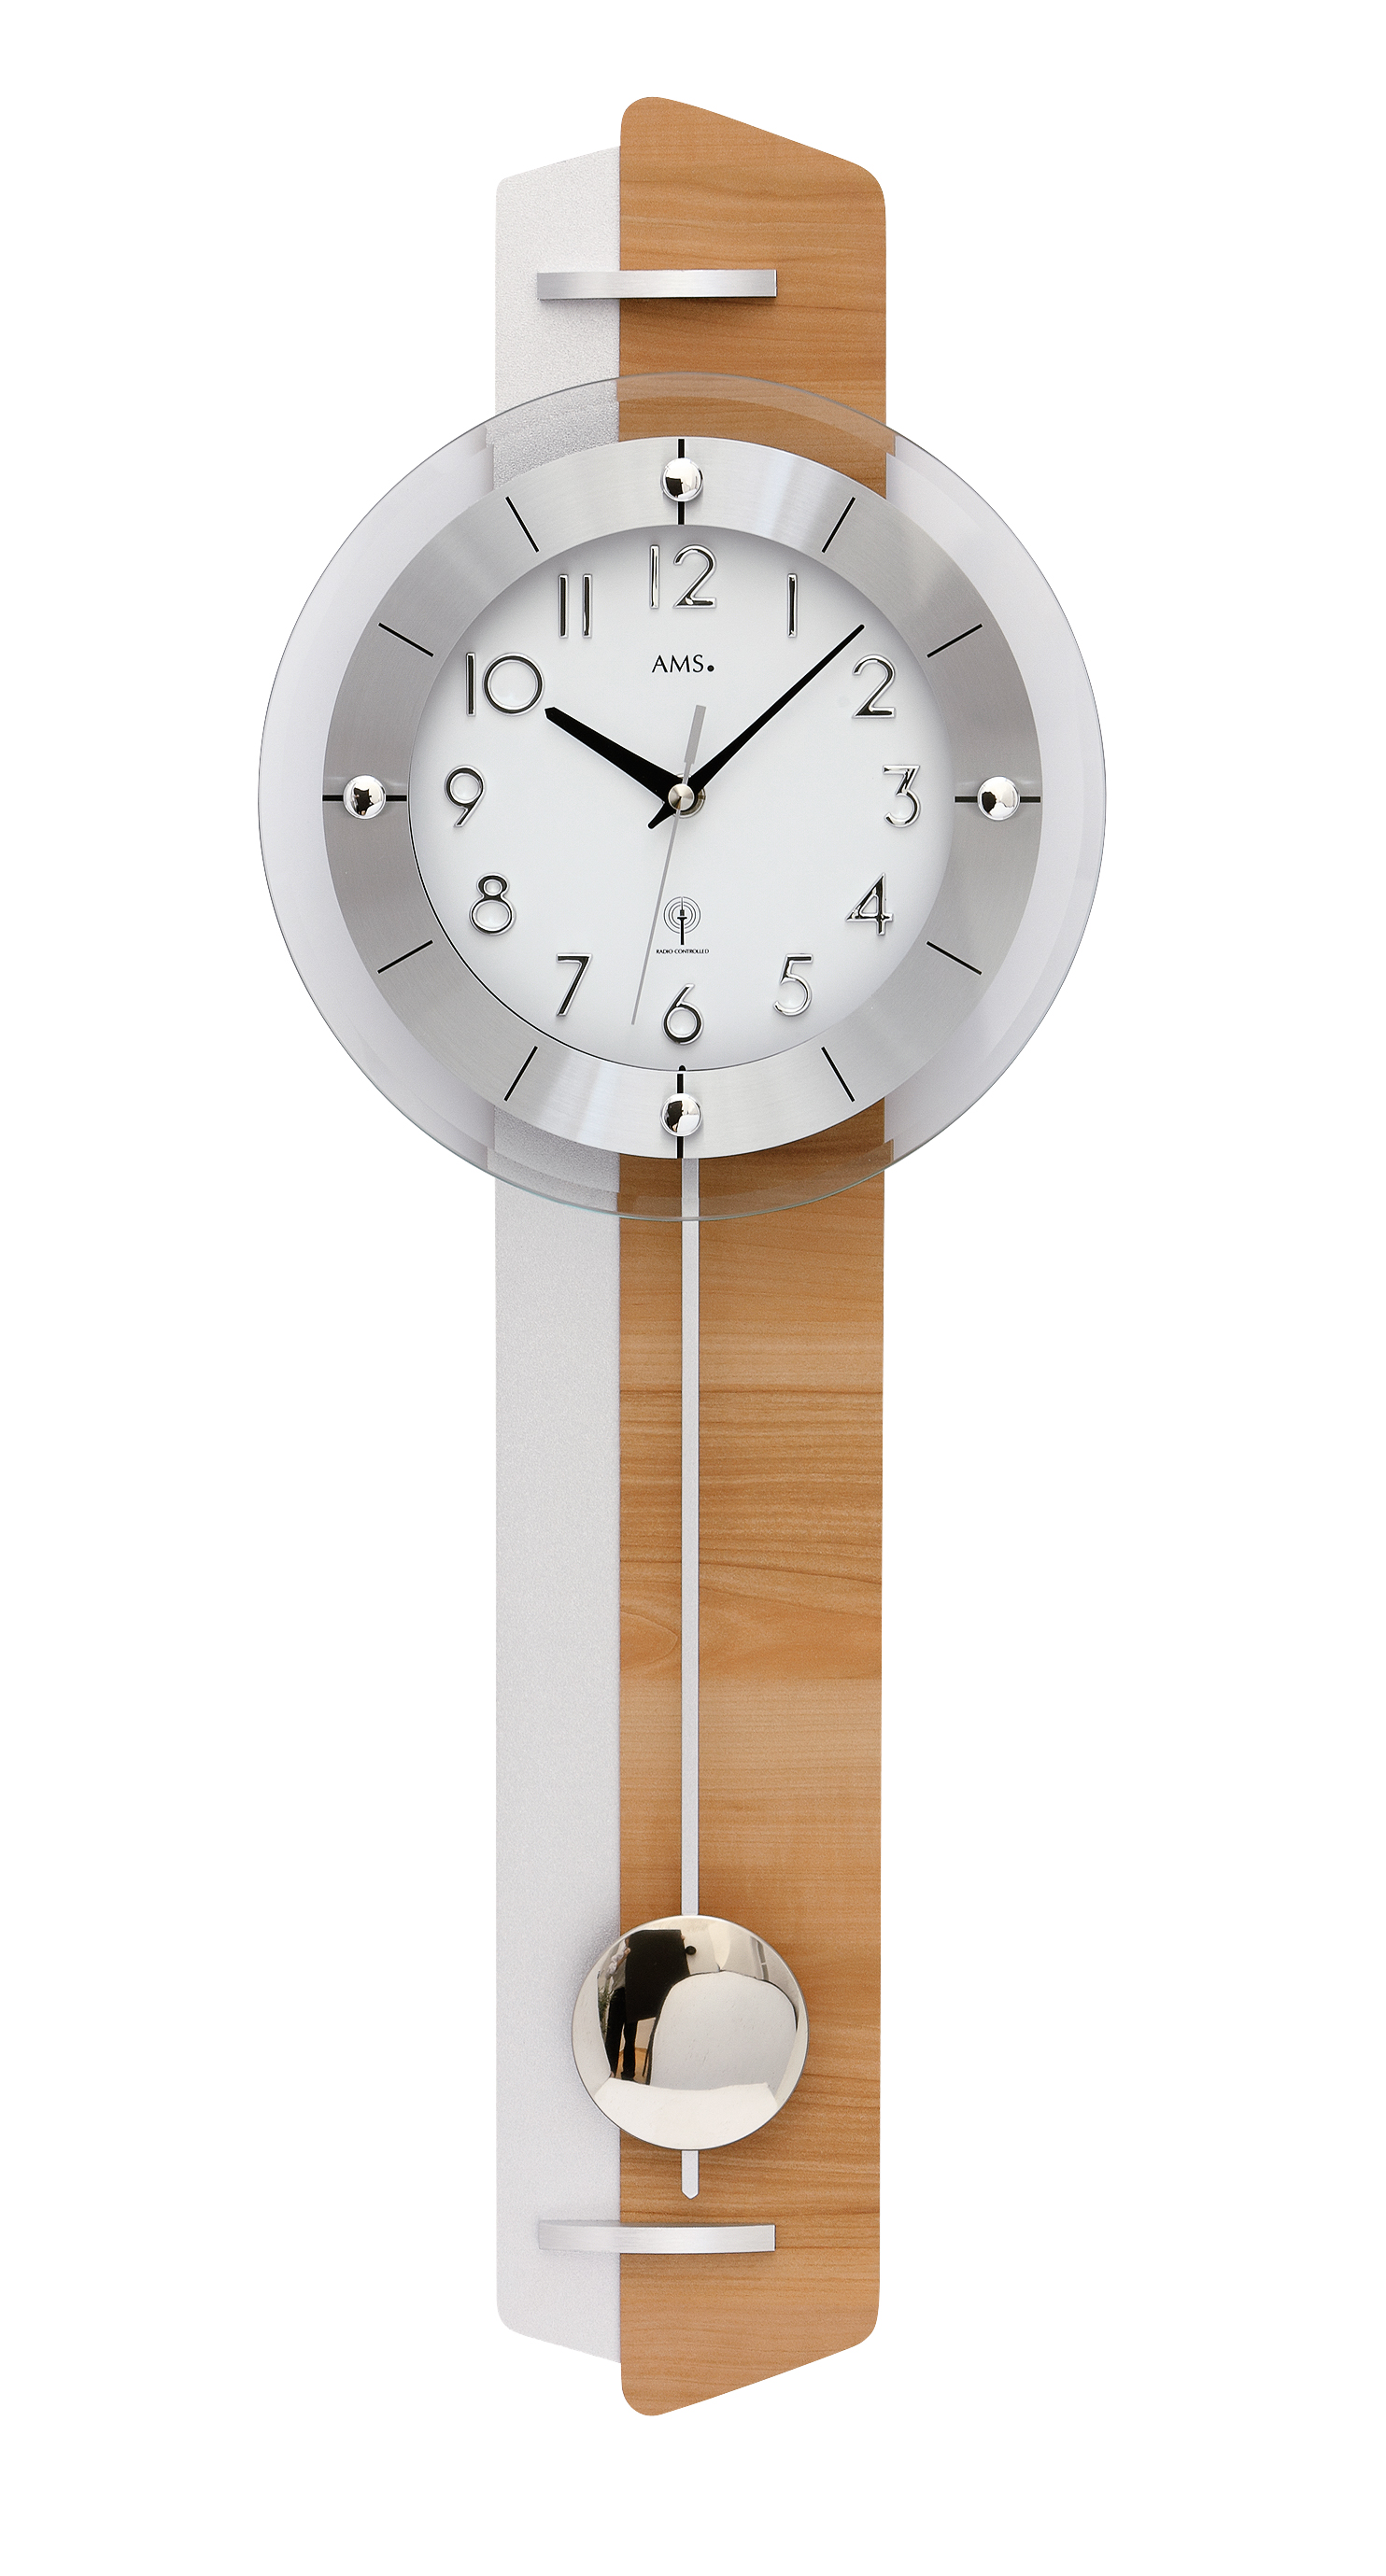 Pendulum wall clocks buy online at Flume (technology).